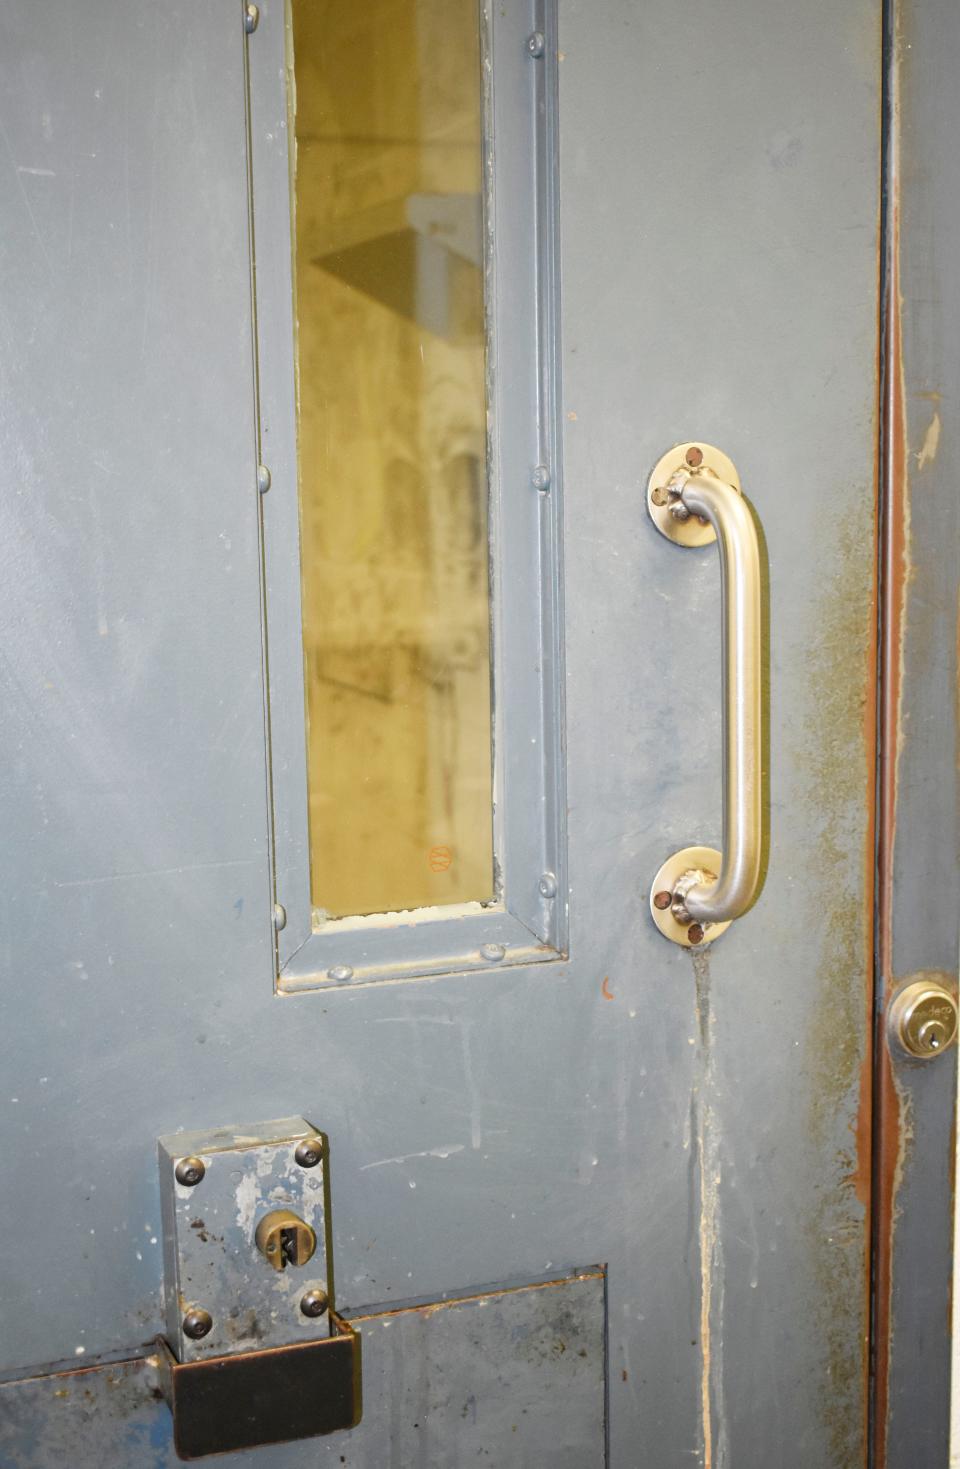 A cell door at the Monroe County Correctional Center June 3, 2022.